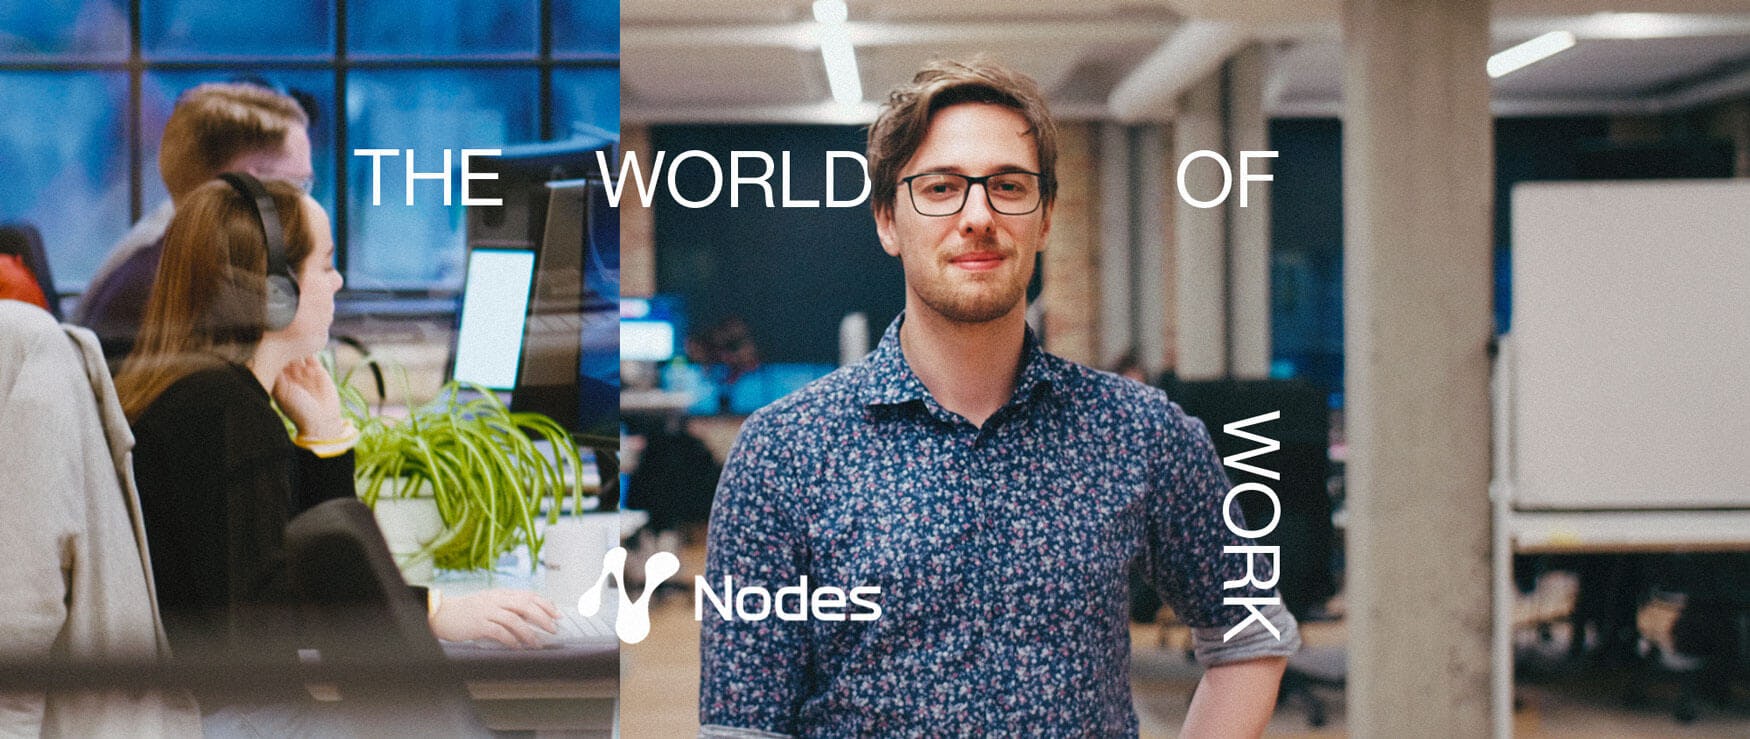 The World of Work: Nodes